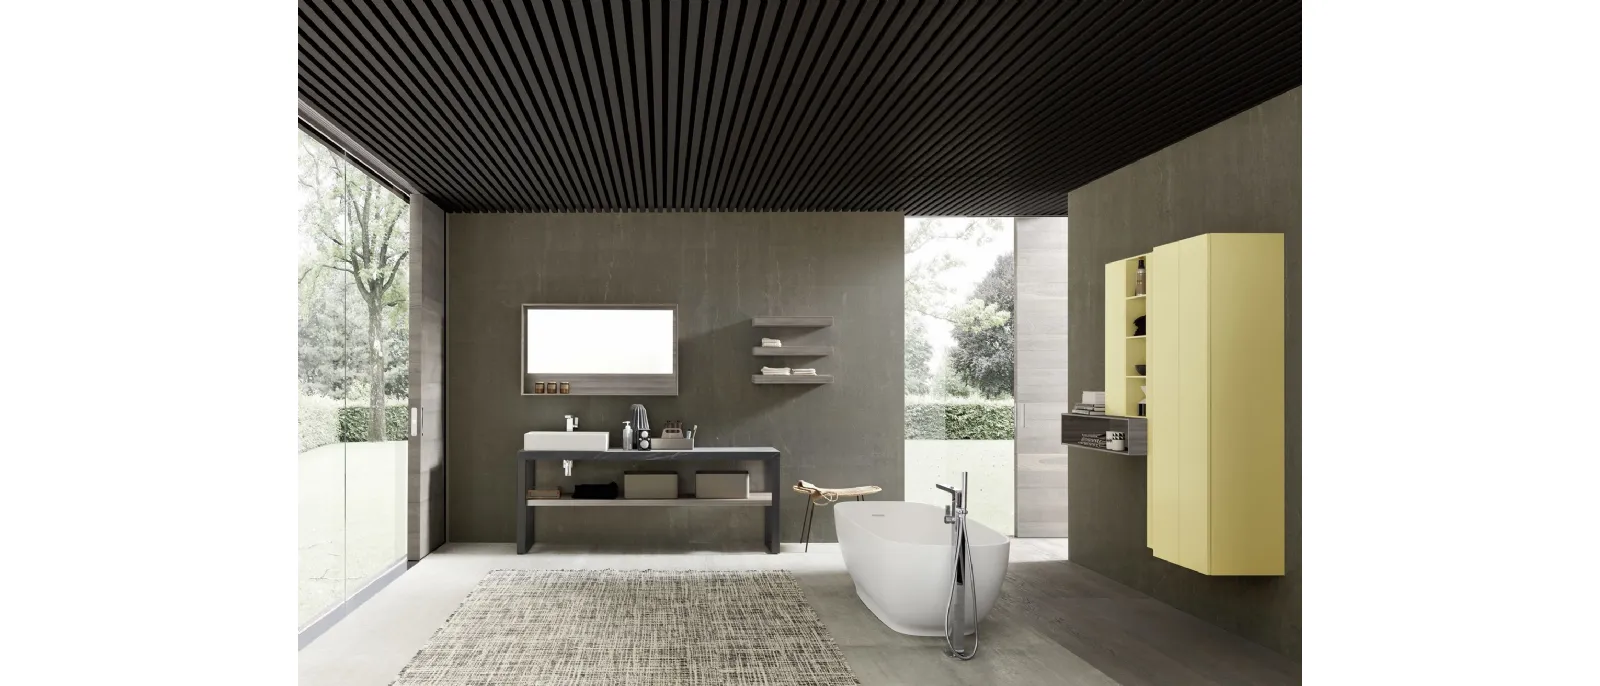 C002 bathroom furniture in melamine by Baxar